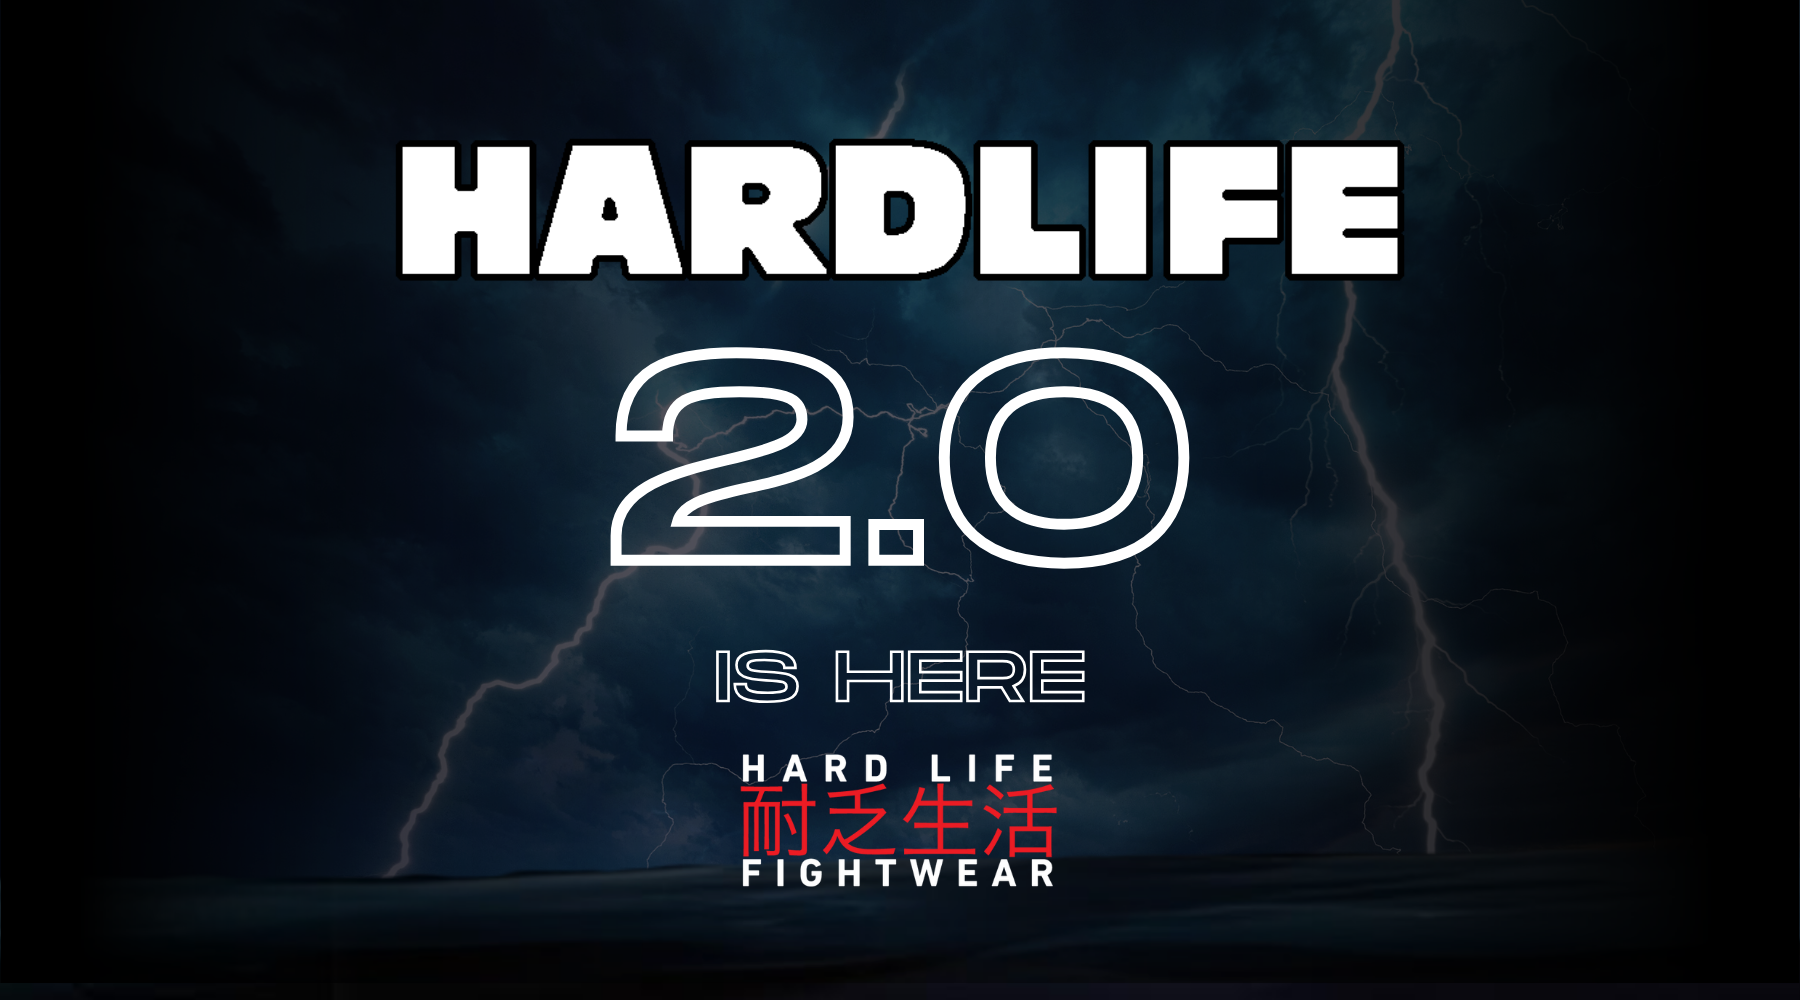 Hardllife 2.0 is here